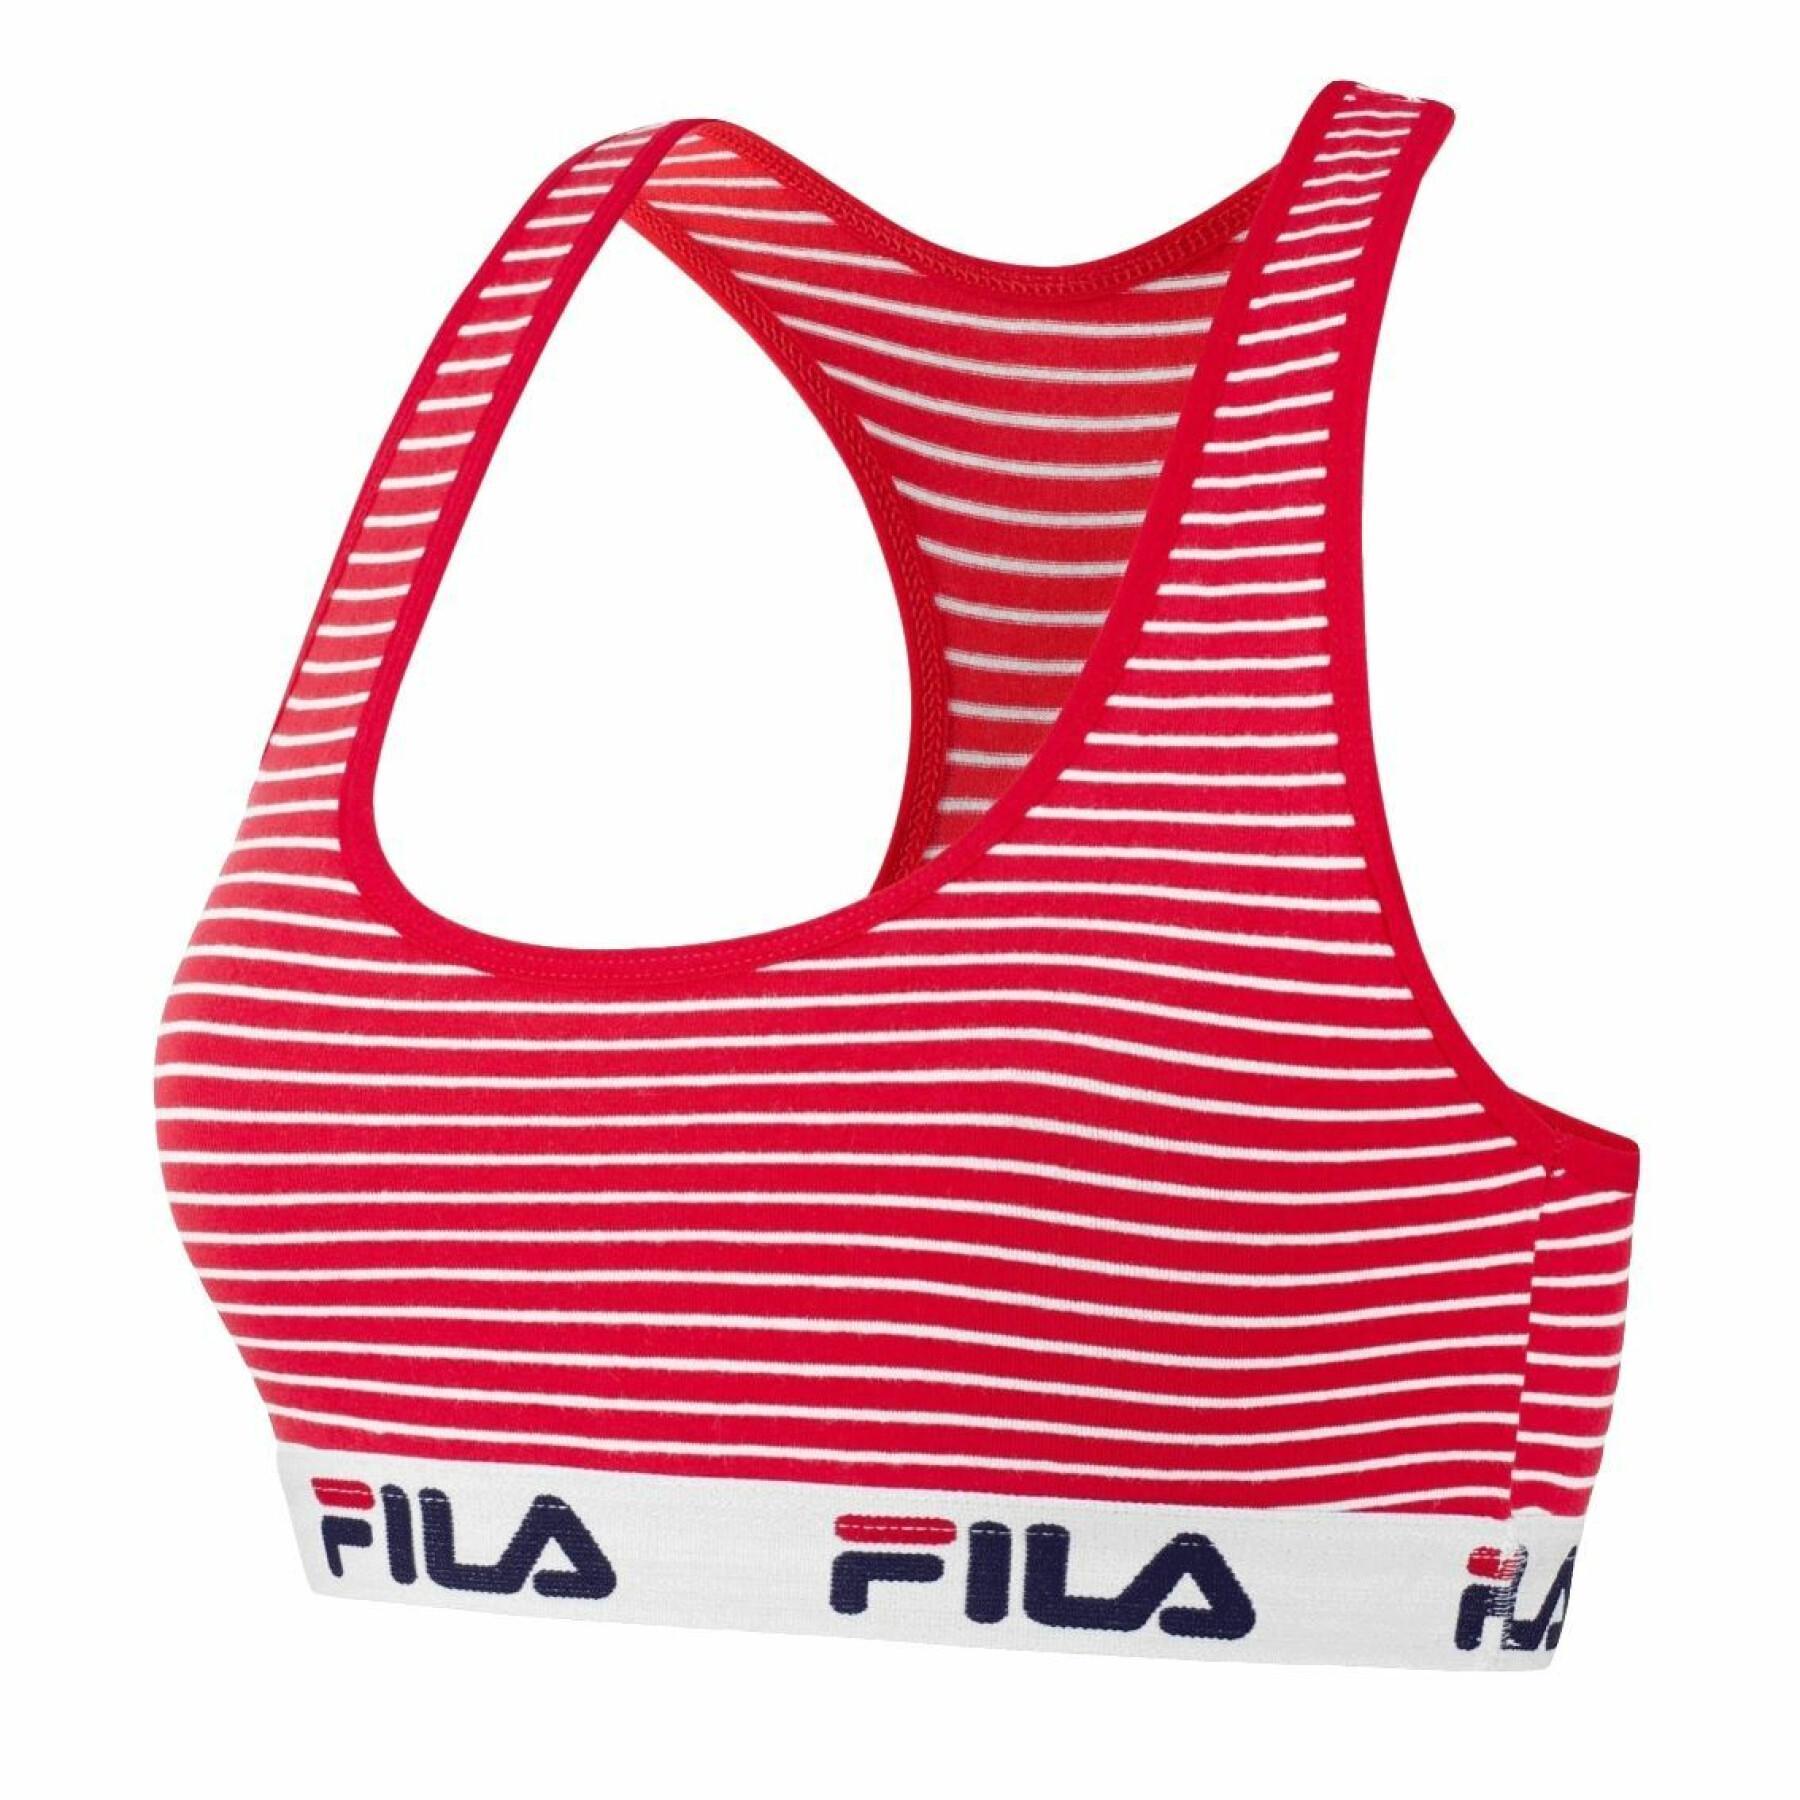 Women's cotton striped bra Fila